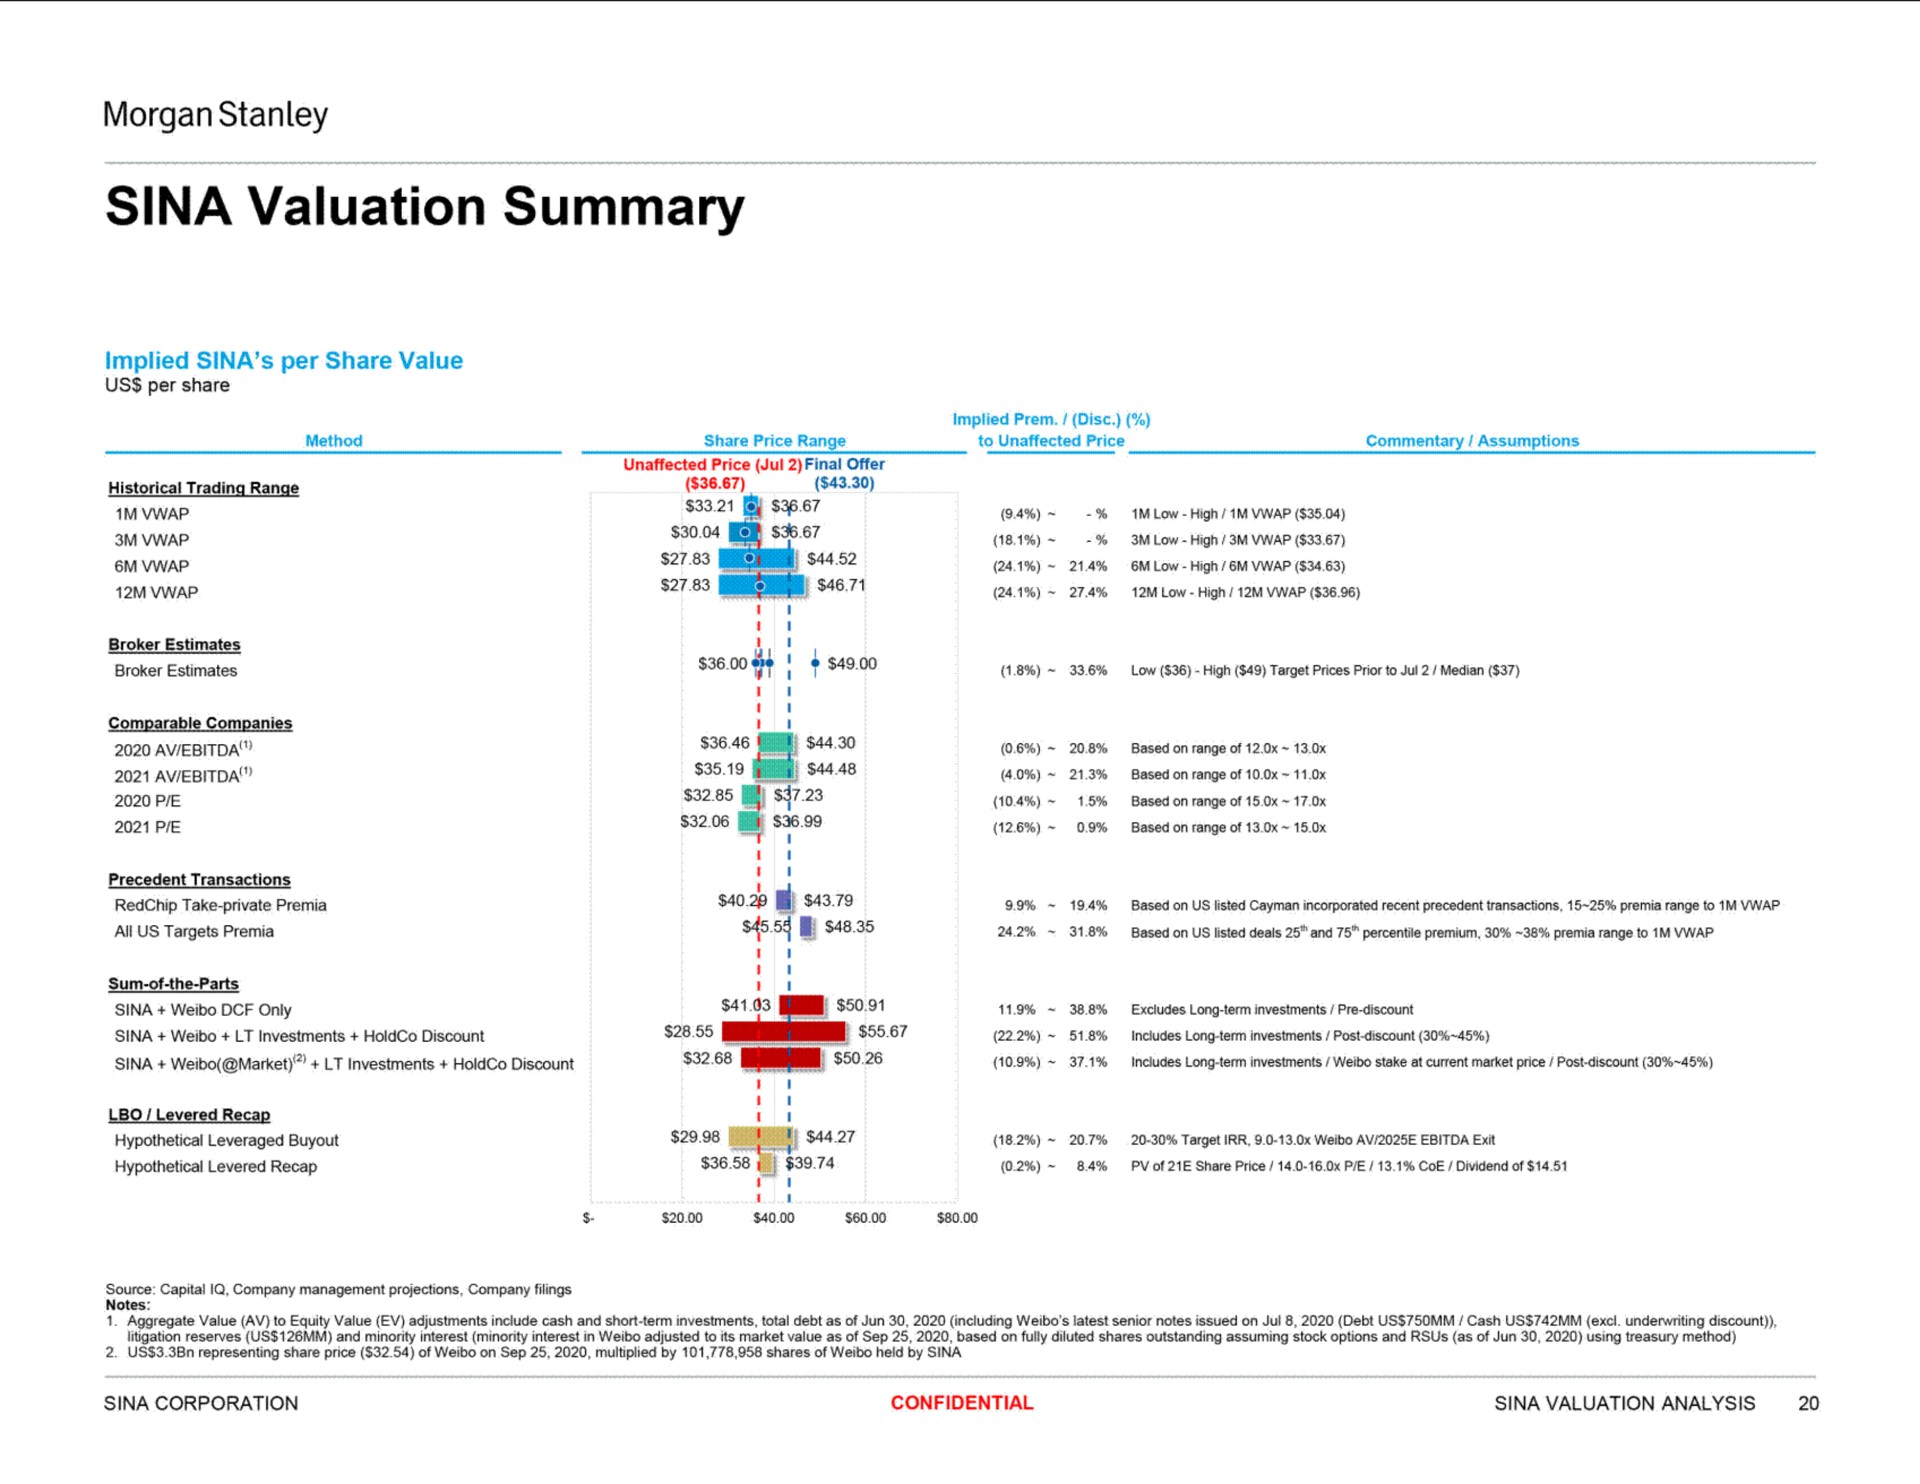 sina valuation summary | Morgan Stanley